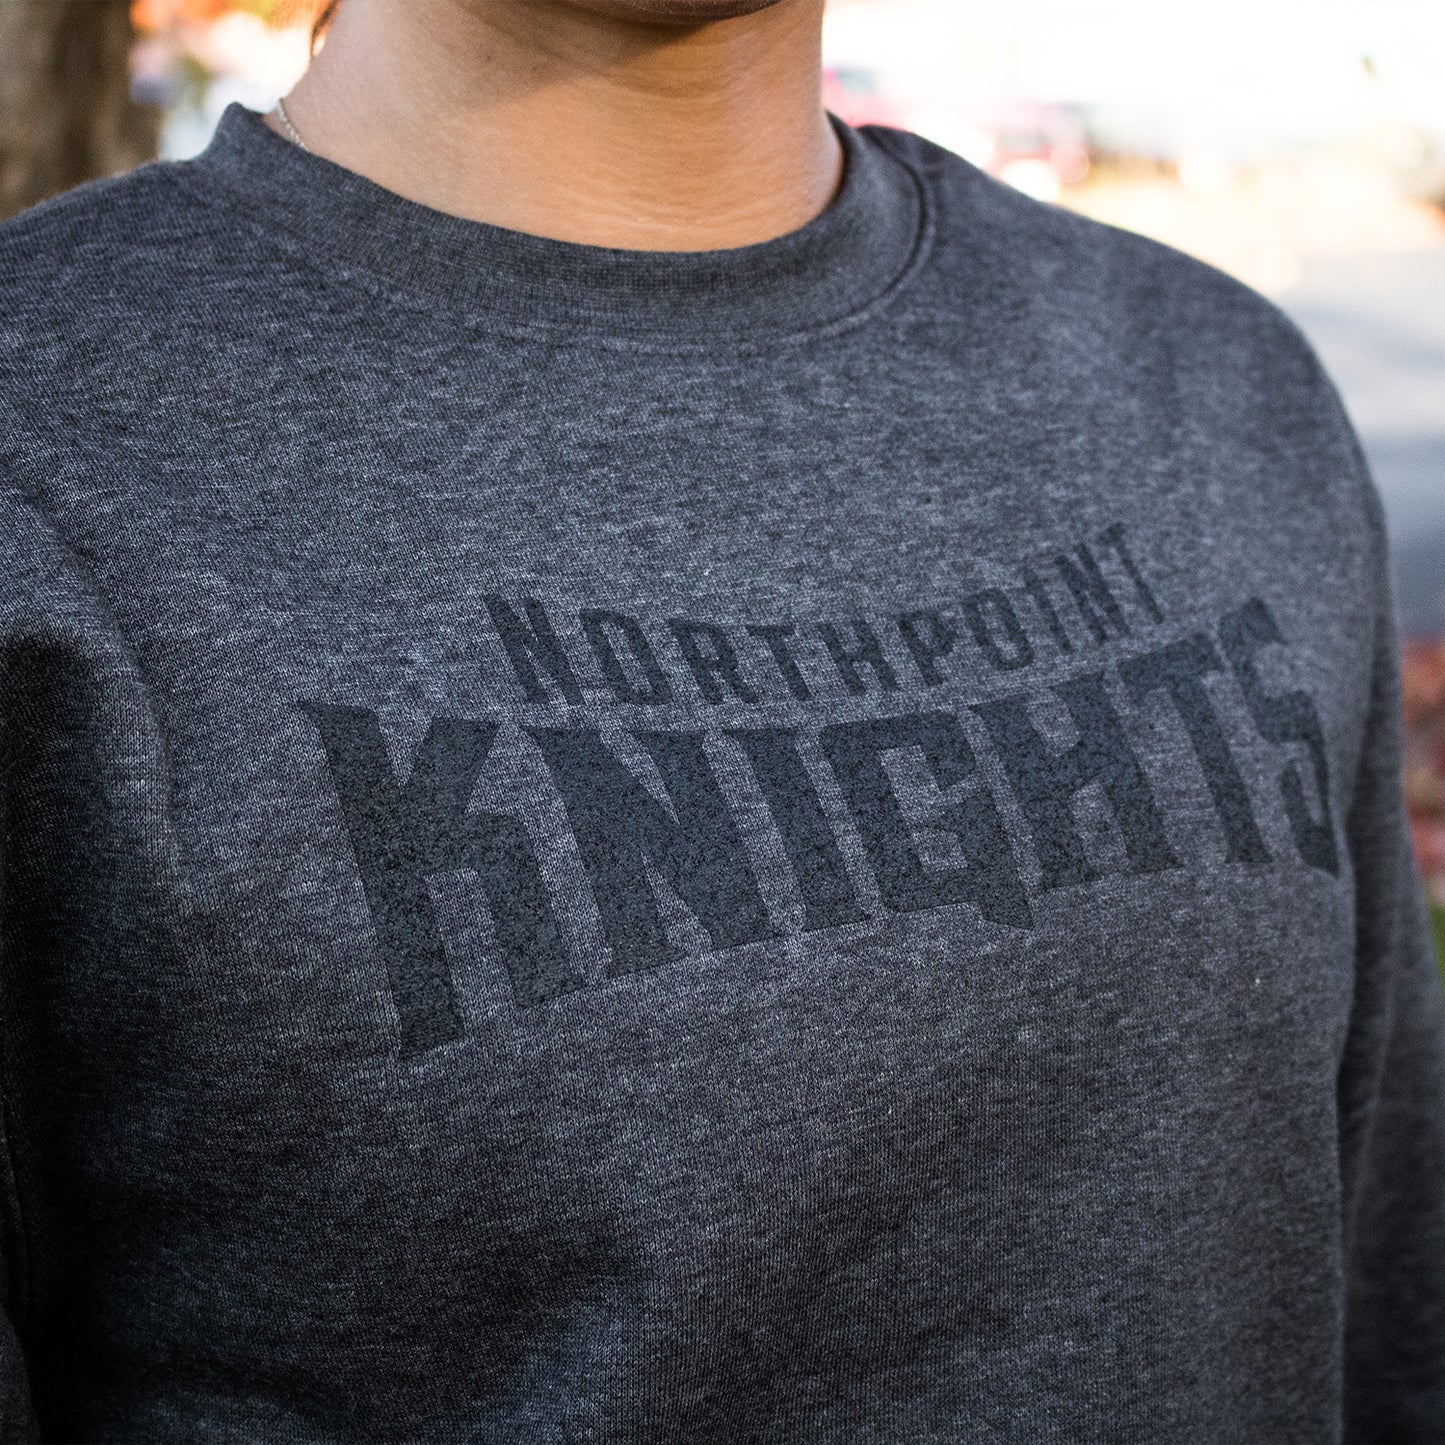 NorthPoint Knights Crewneck Sweatshirt